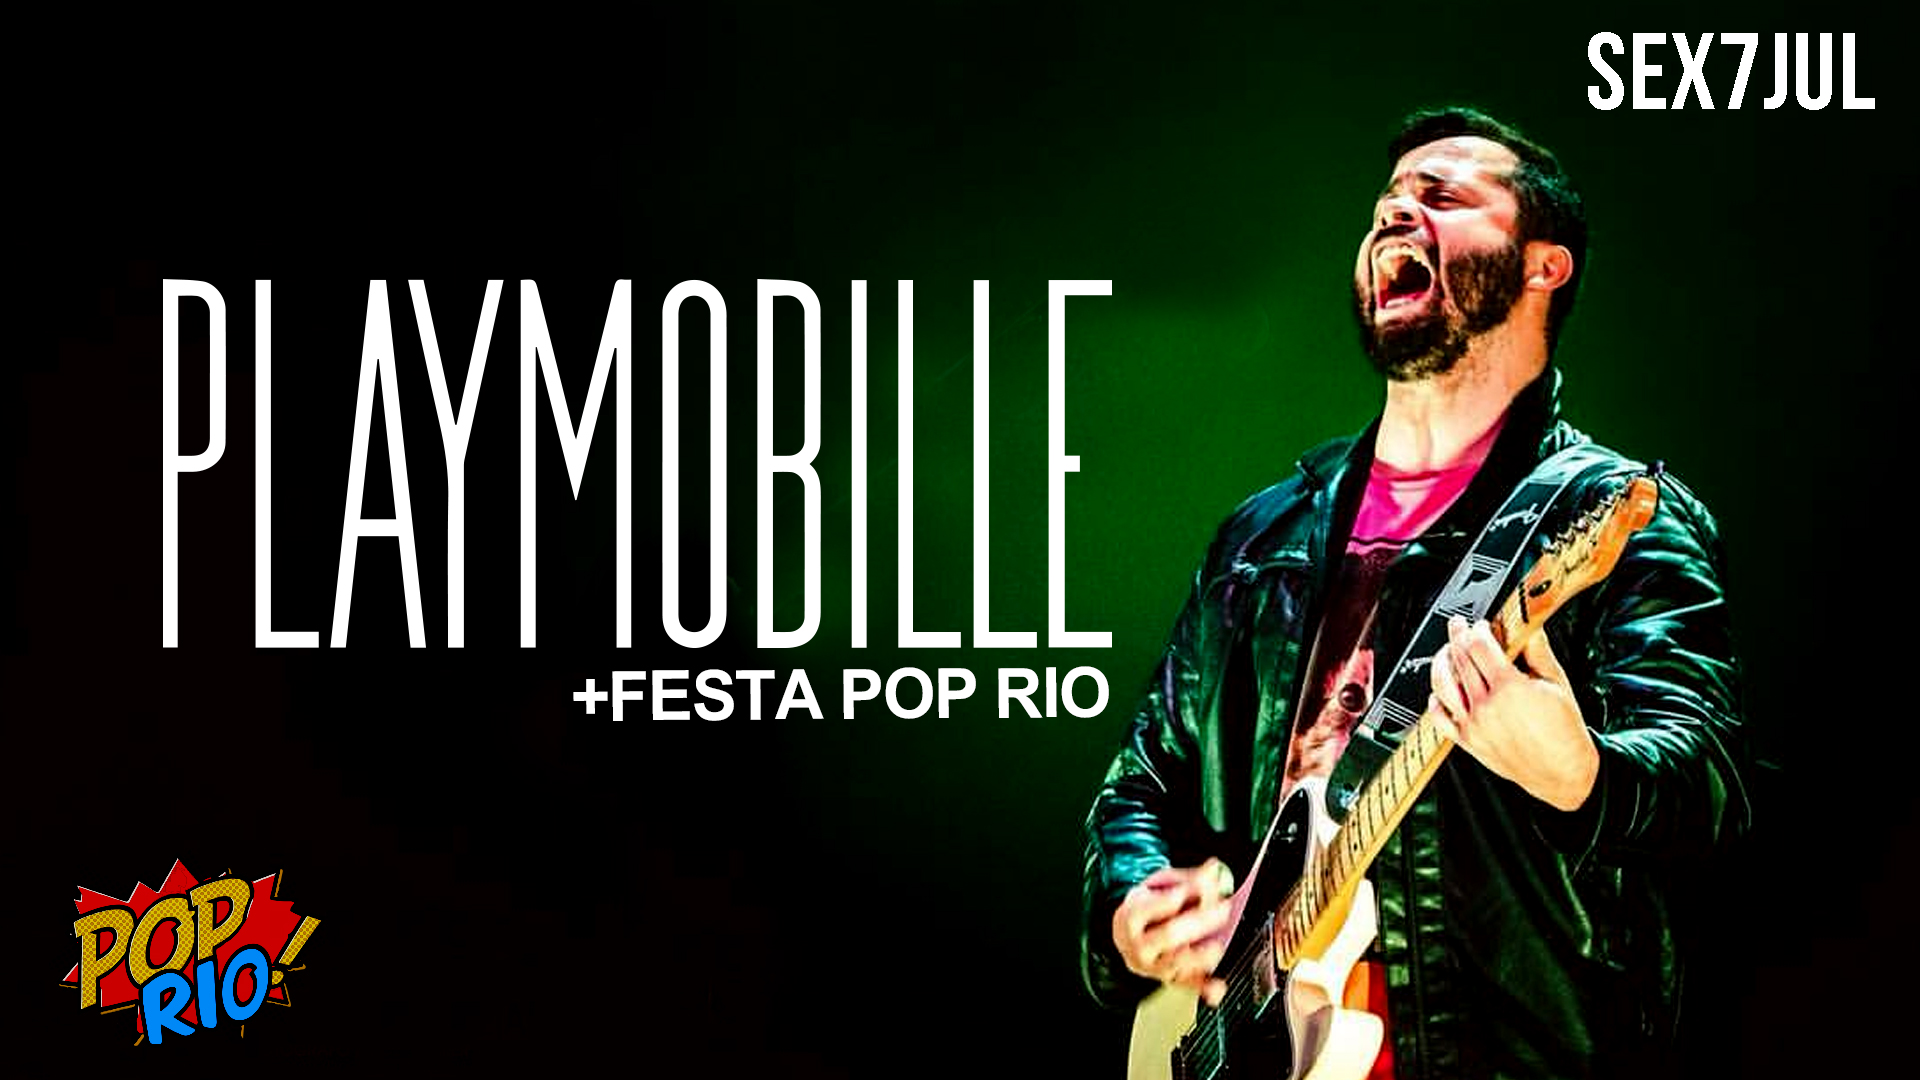 Sunday - Playmobille + Festa Pop Rio